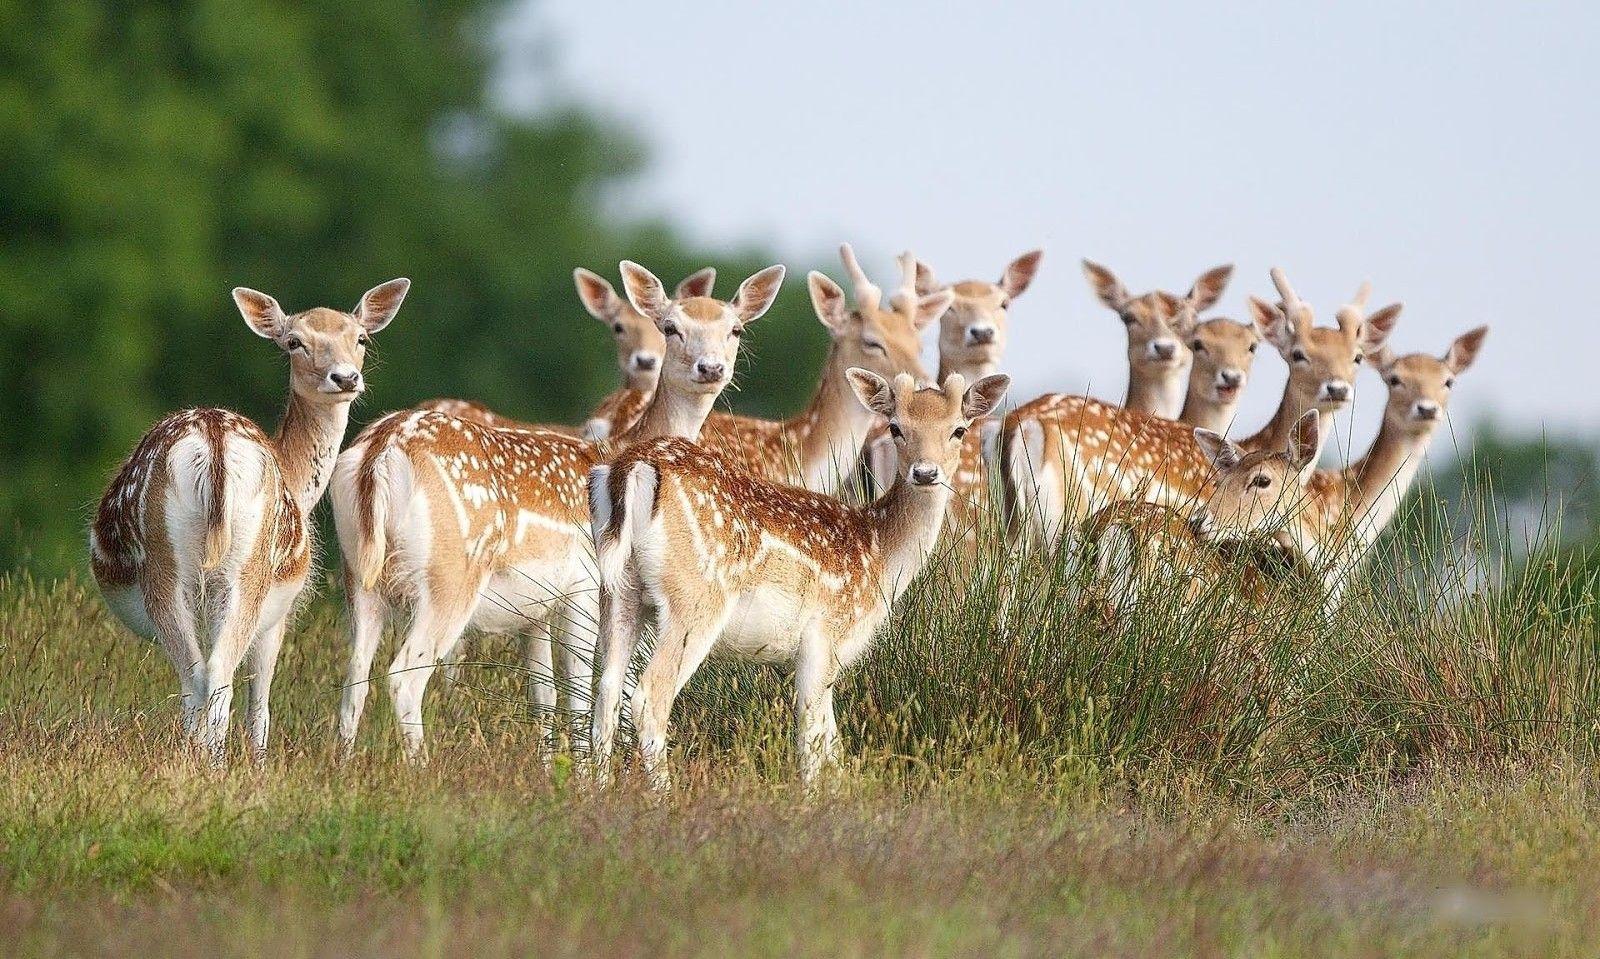 The Beautiful Animal in #Sundarban is Cute #deer.the Natural Beauty